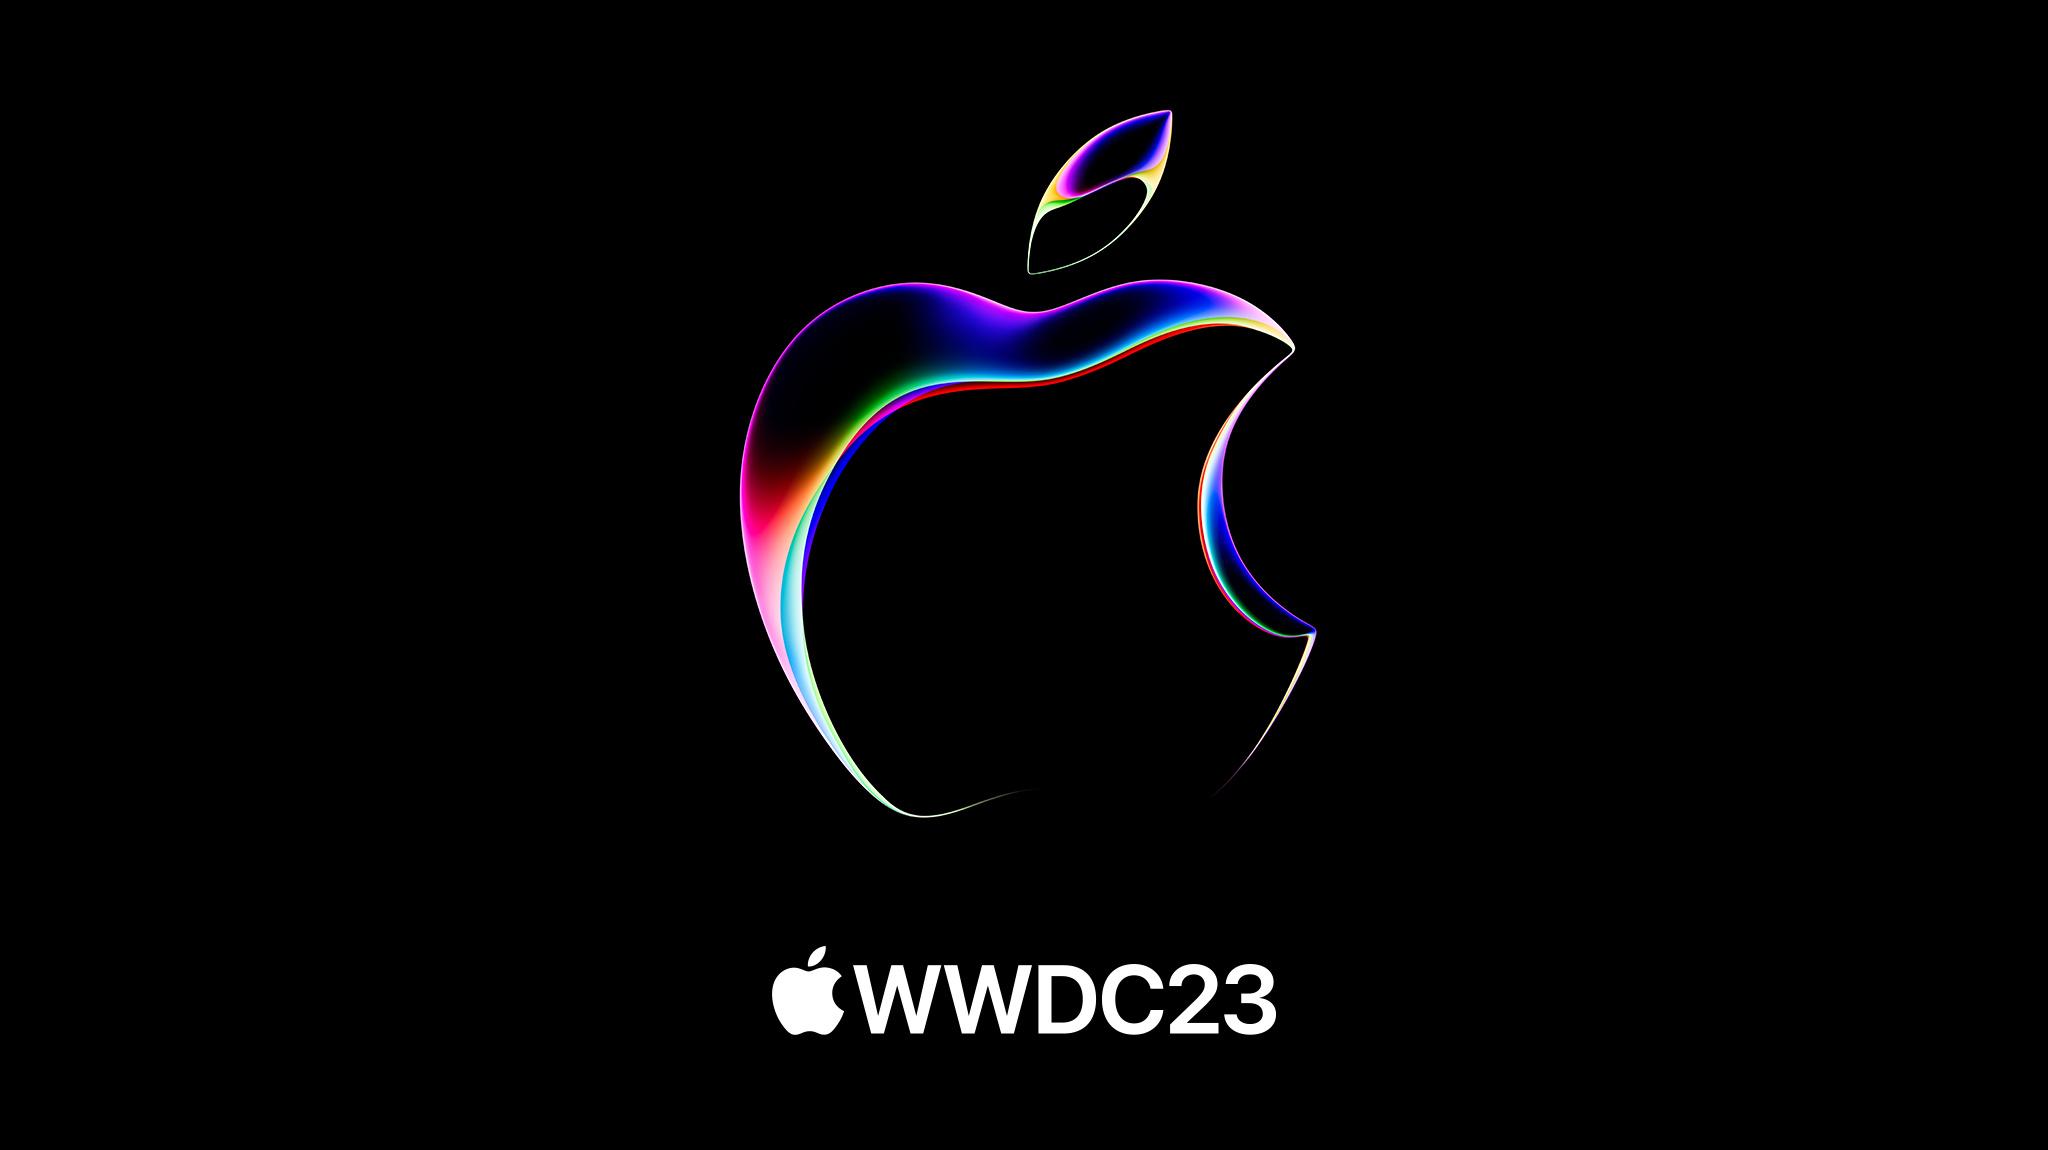 Apple opens Activities sign ups for WWDC 2023